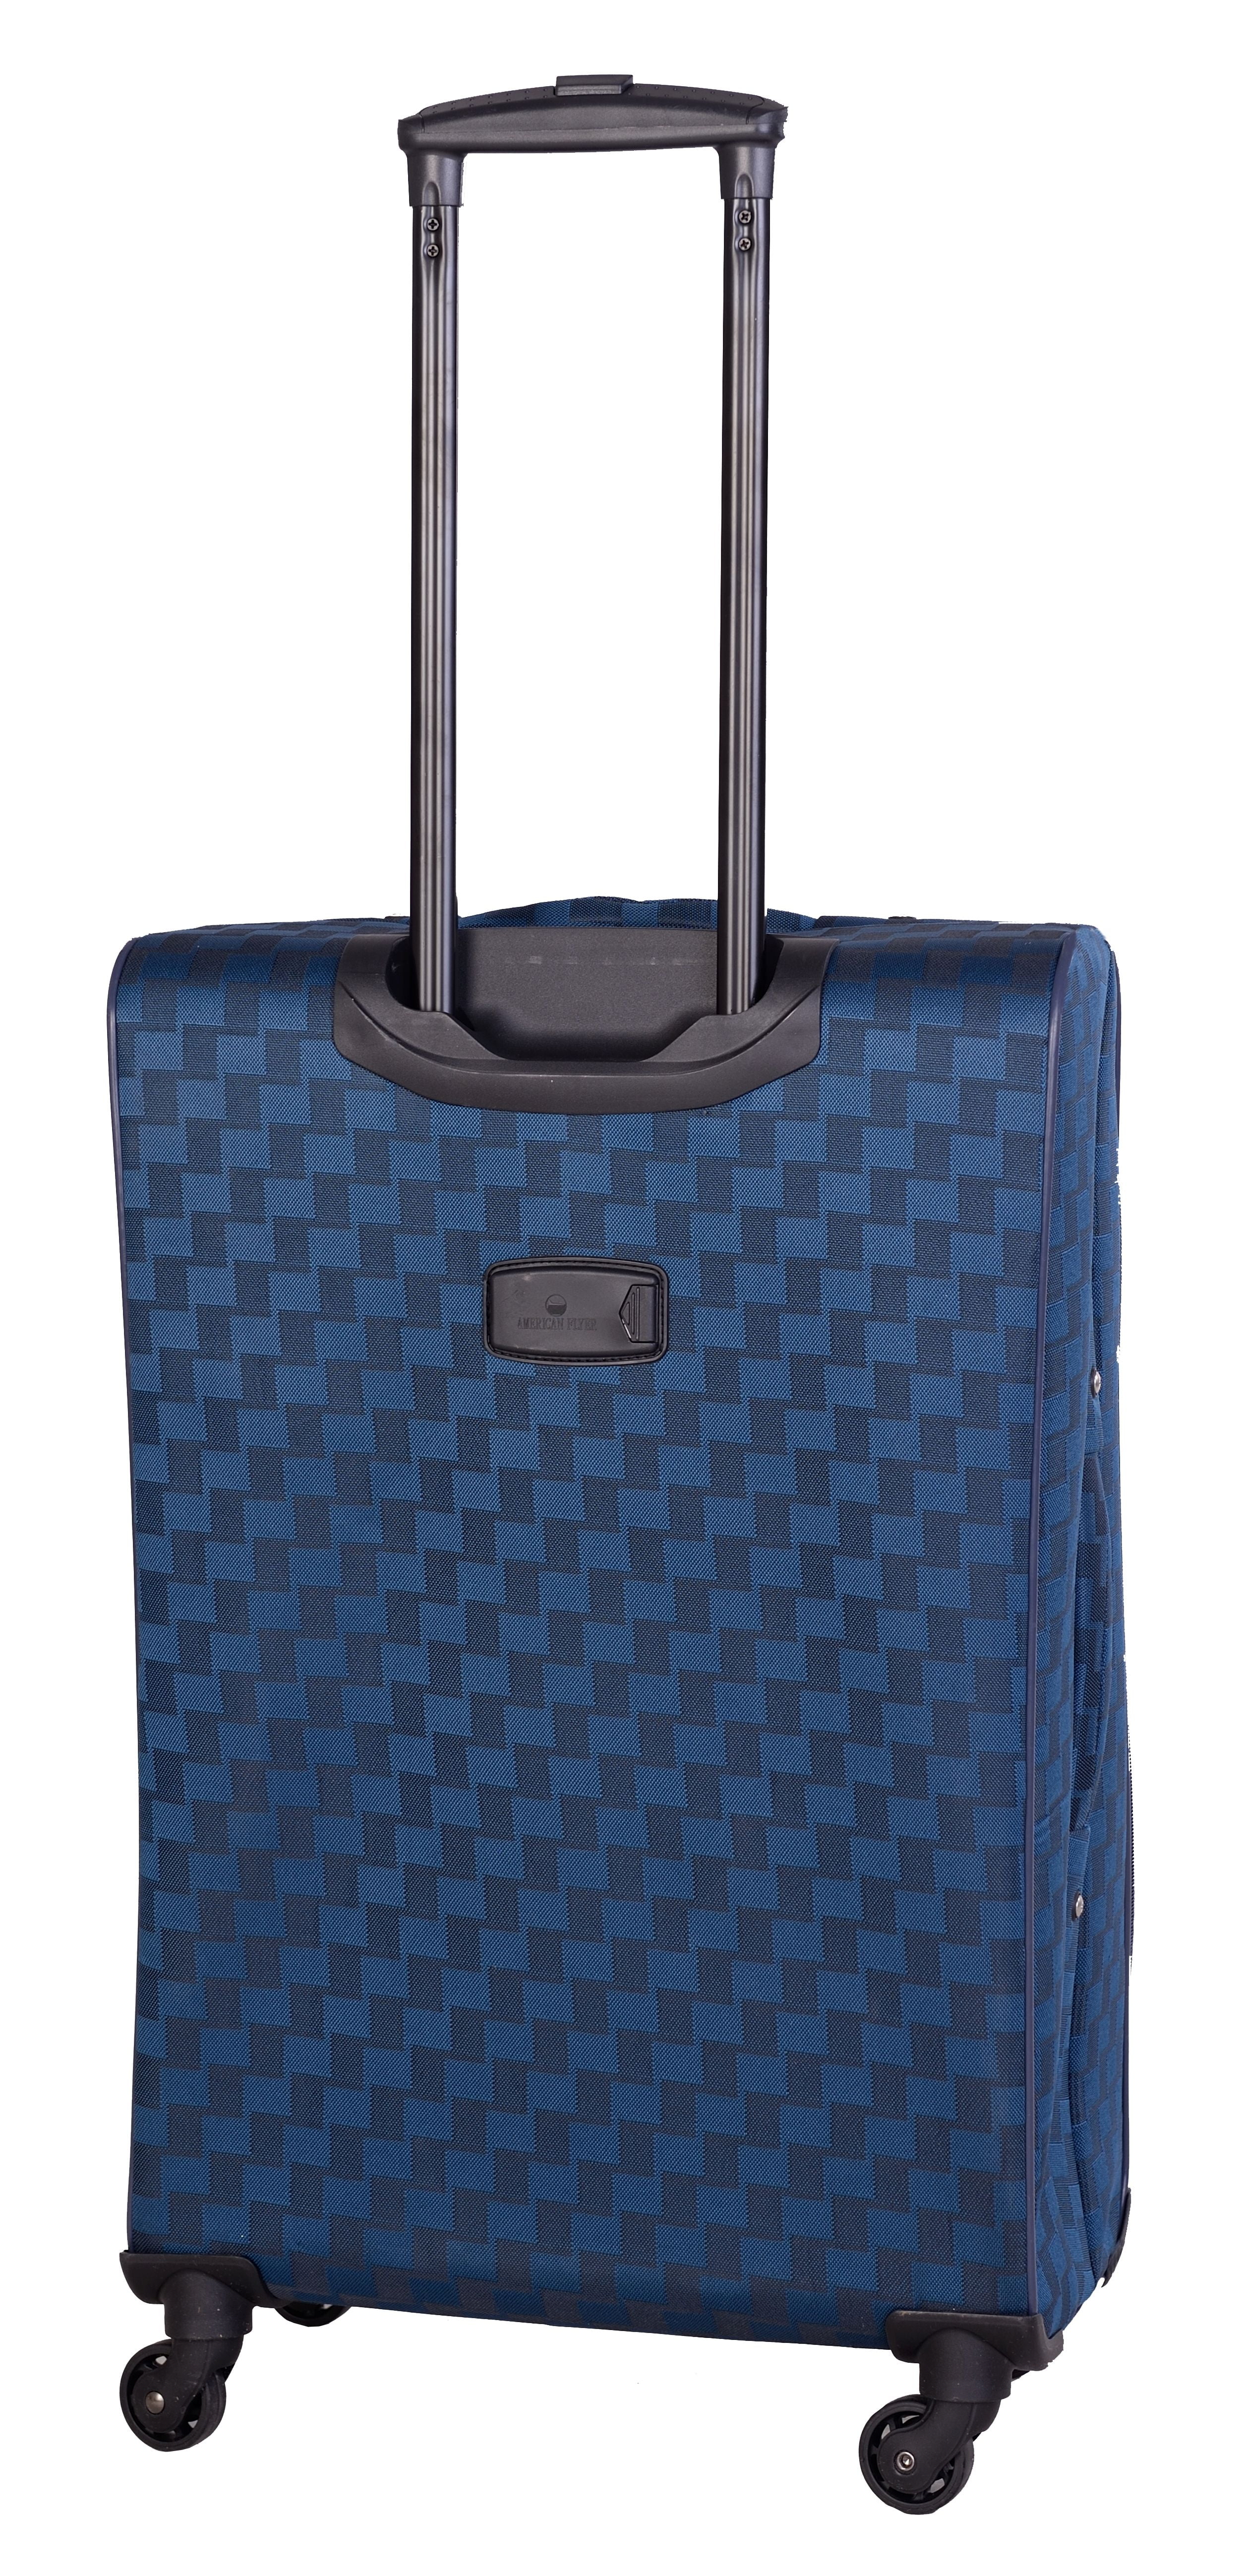 Shop American Flyer Clair 5-Piece Luggage Set – Luggage Factory